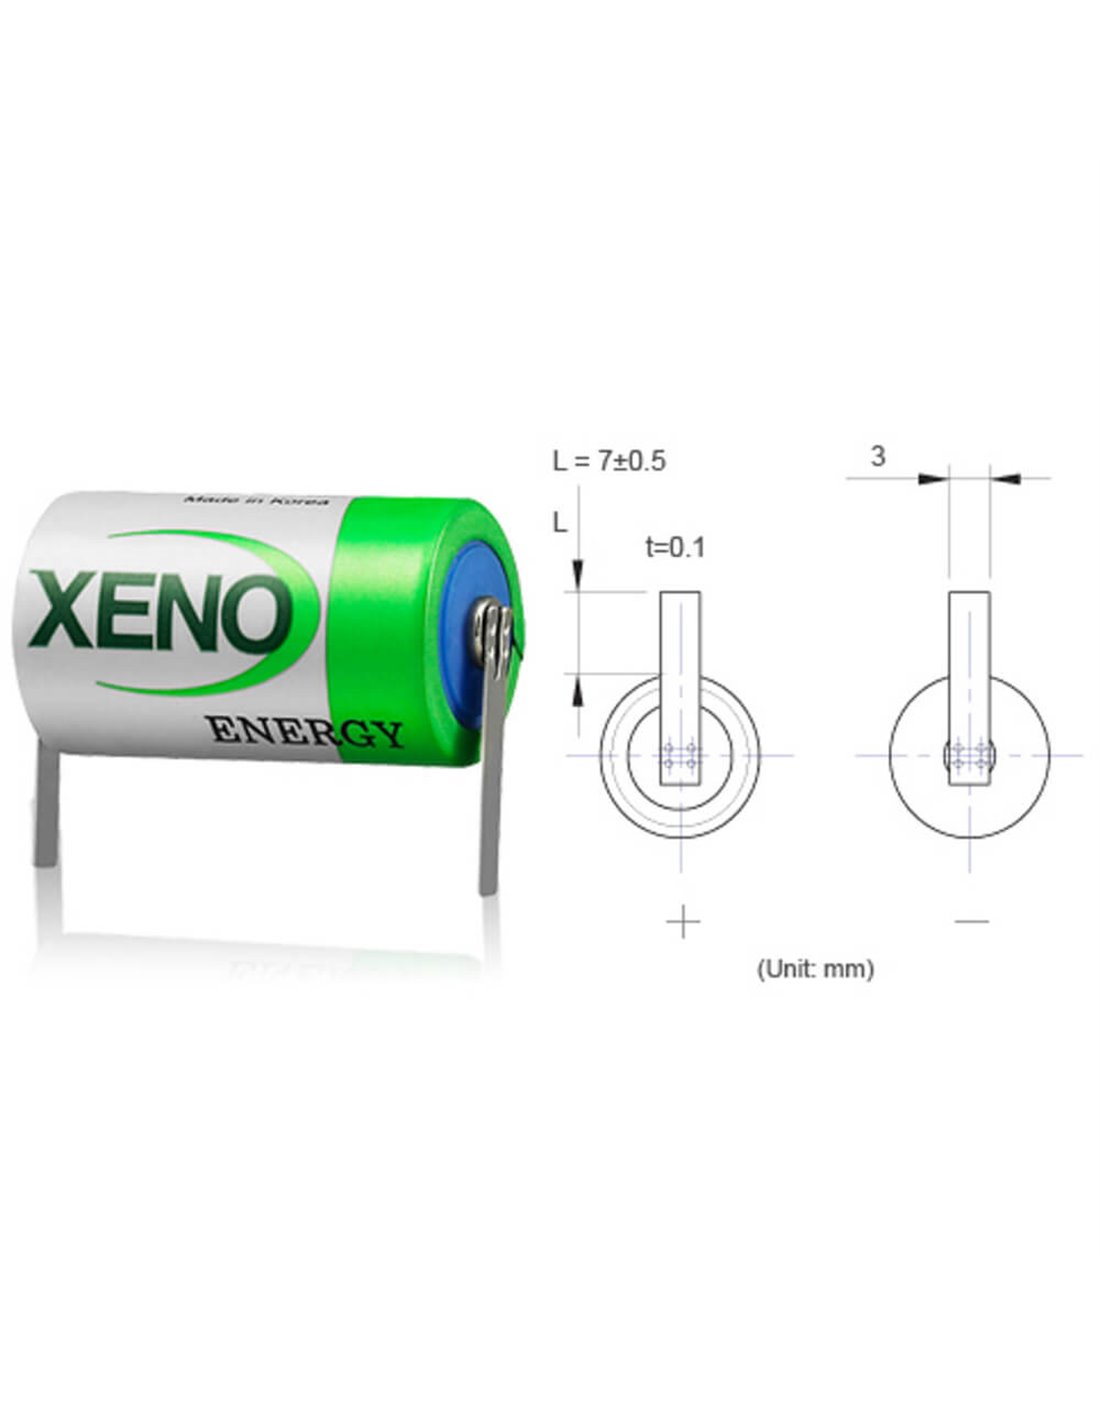 Xeno XL-050F Battery, 3.6V 1/2 AA Lithium Battery (ER14250) 3.6V